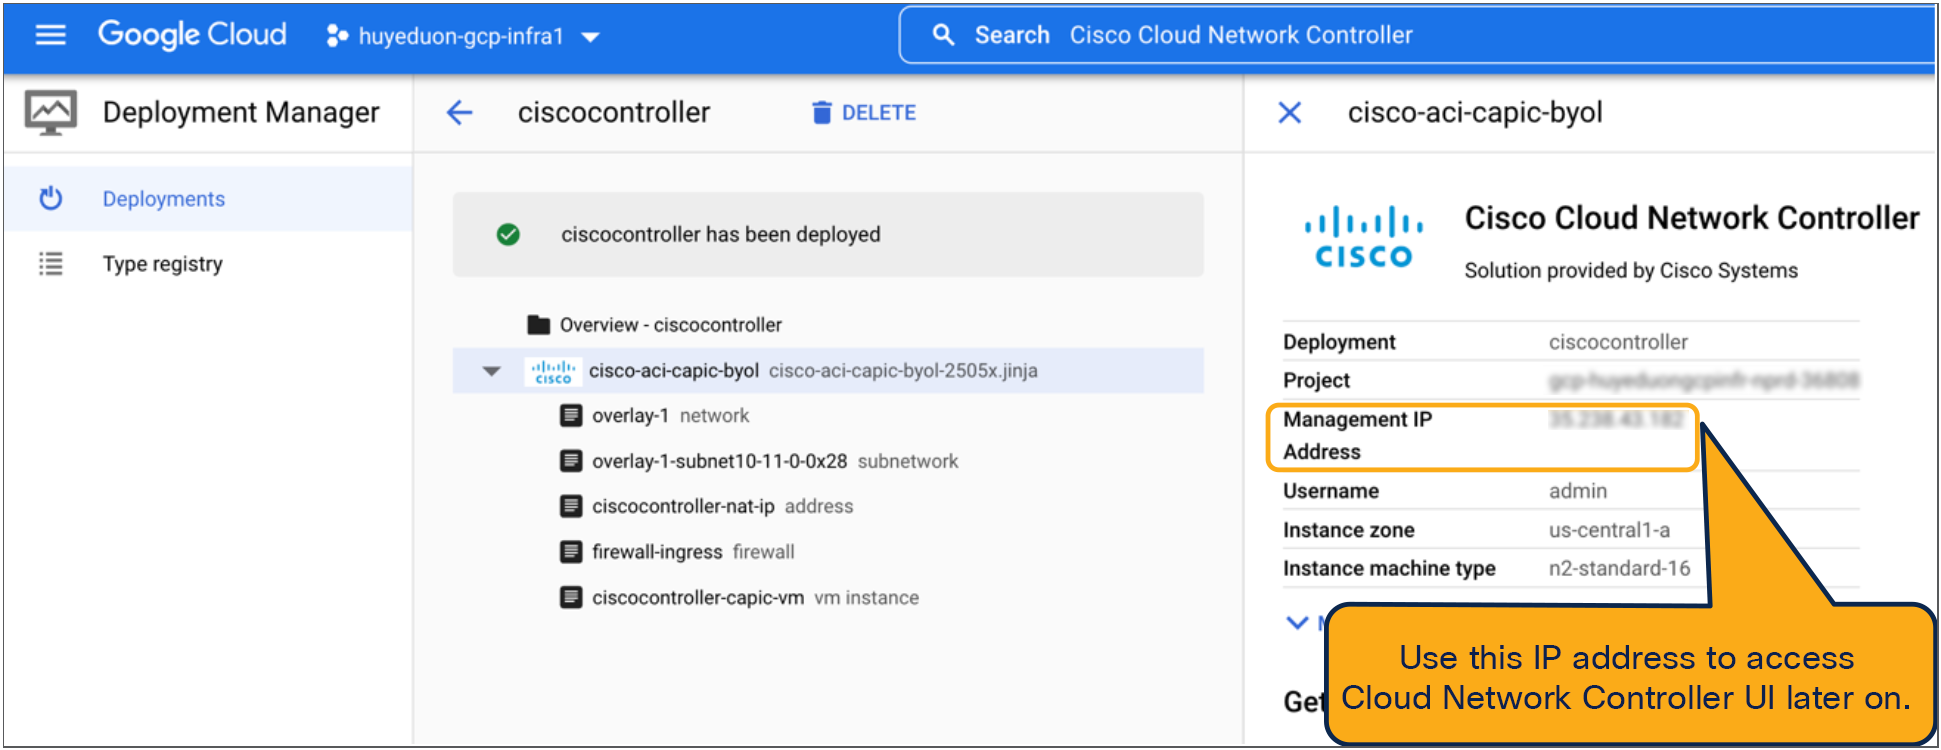 Cisco Cloud Network Controller virtual machine with public IP address